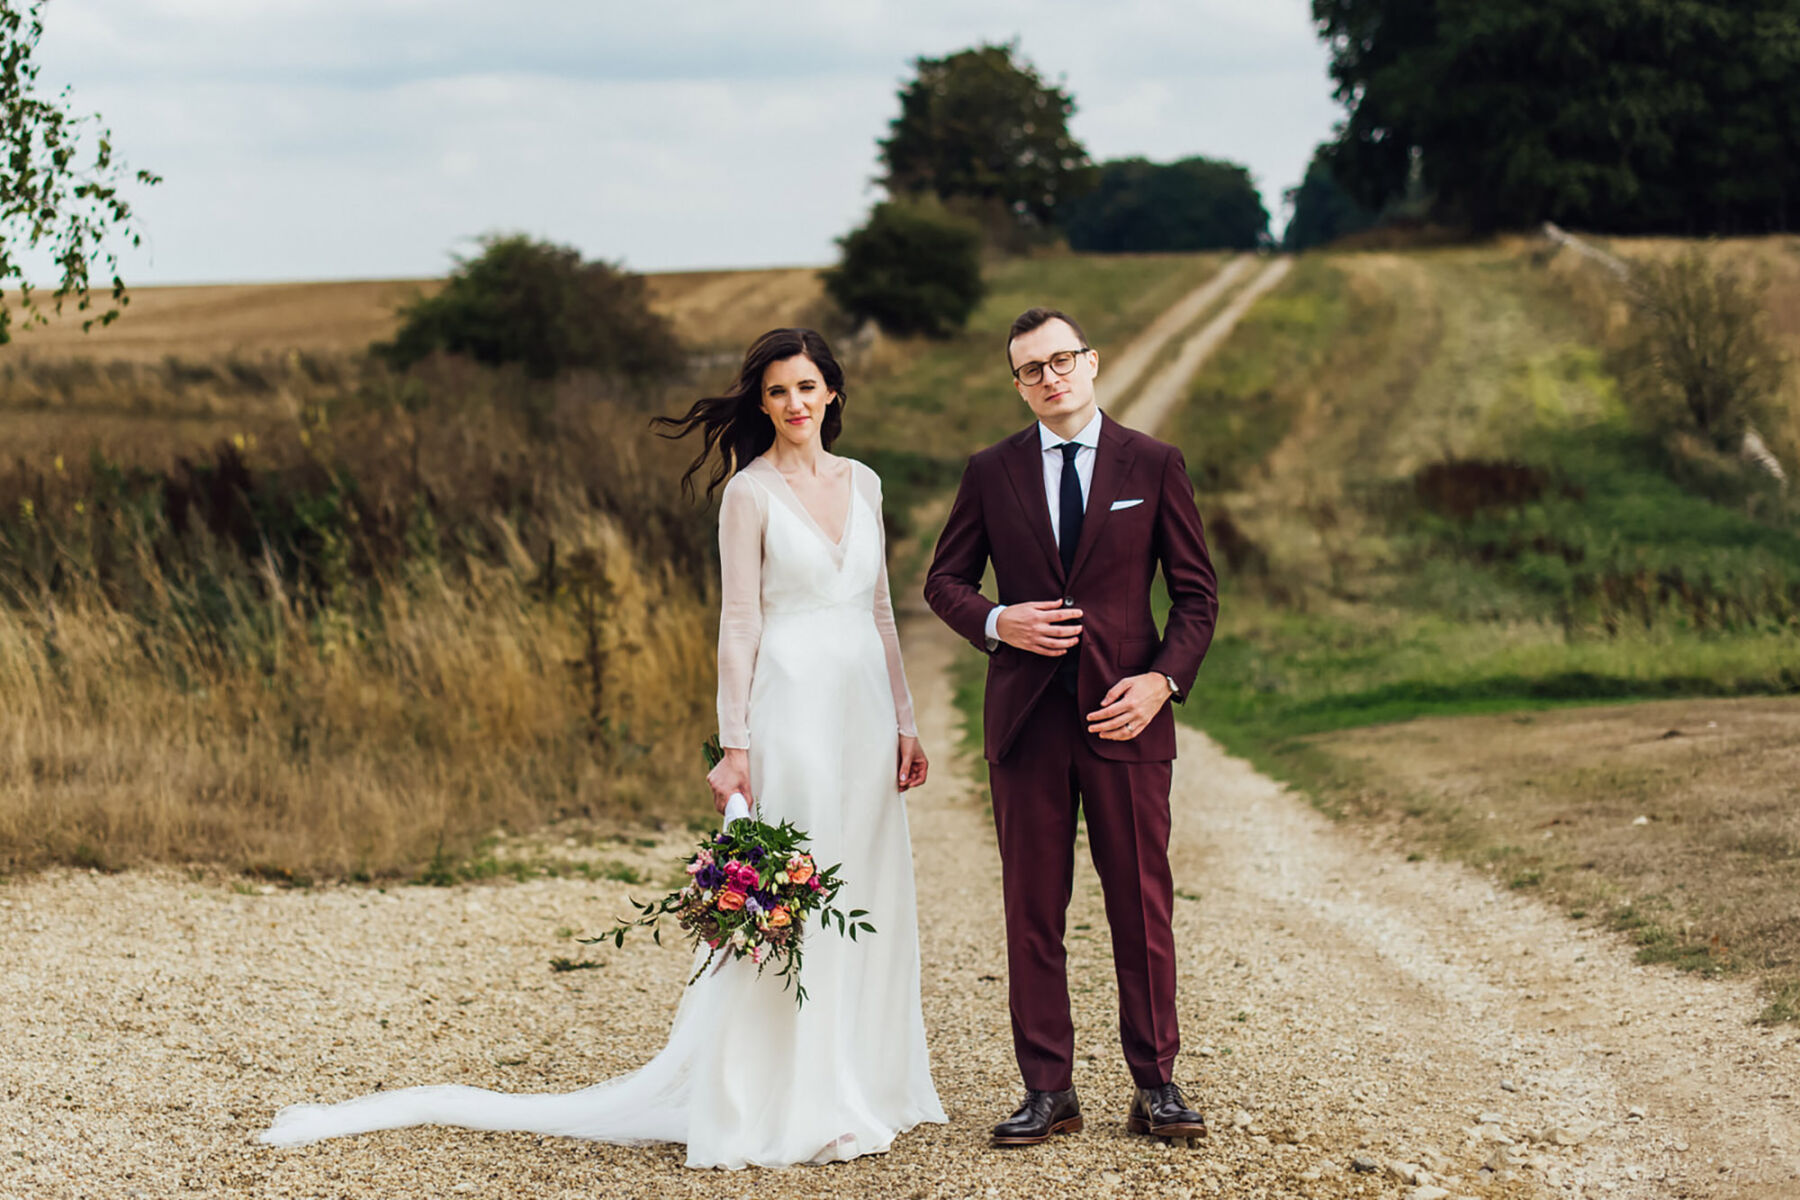 Bride in Andrea Hawkes simple & elegant wedding dress. Groom in burgundy suit. Michelle Woods Photography.